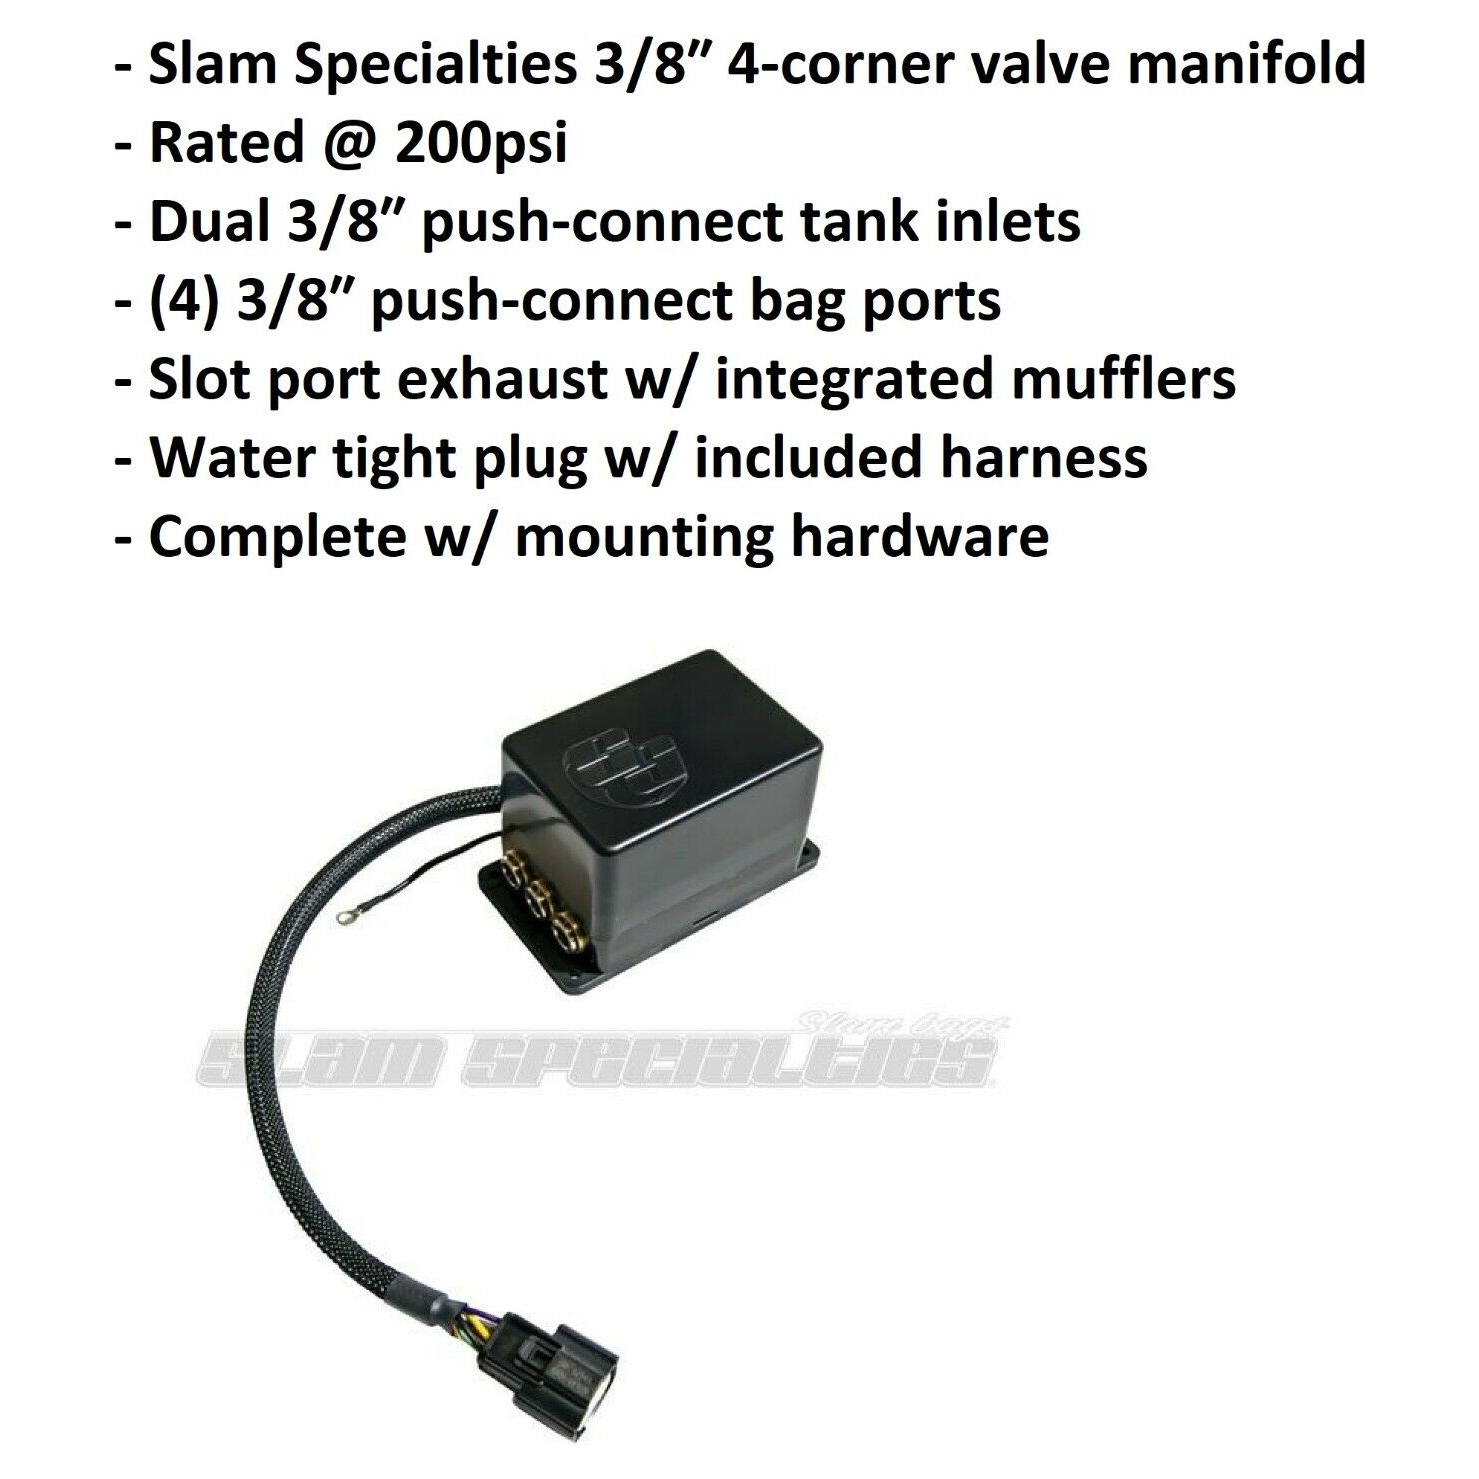 slam specialties 3/8 4-corner valve manifold